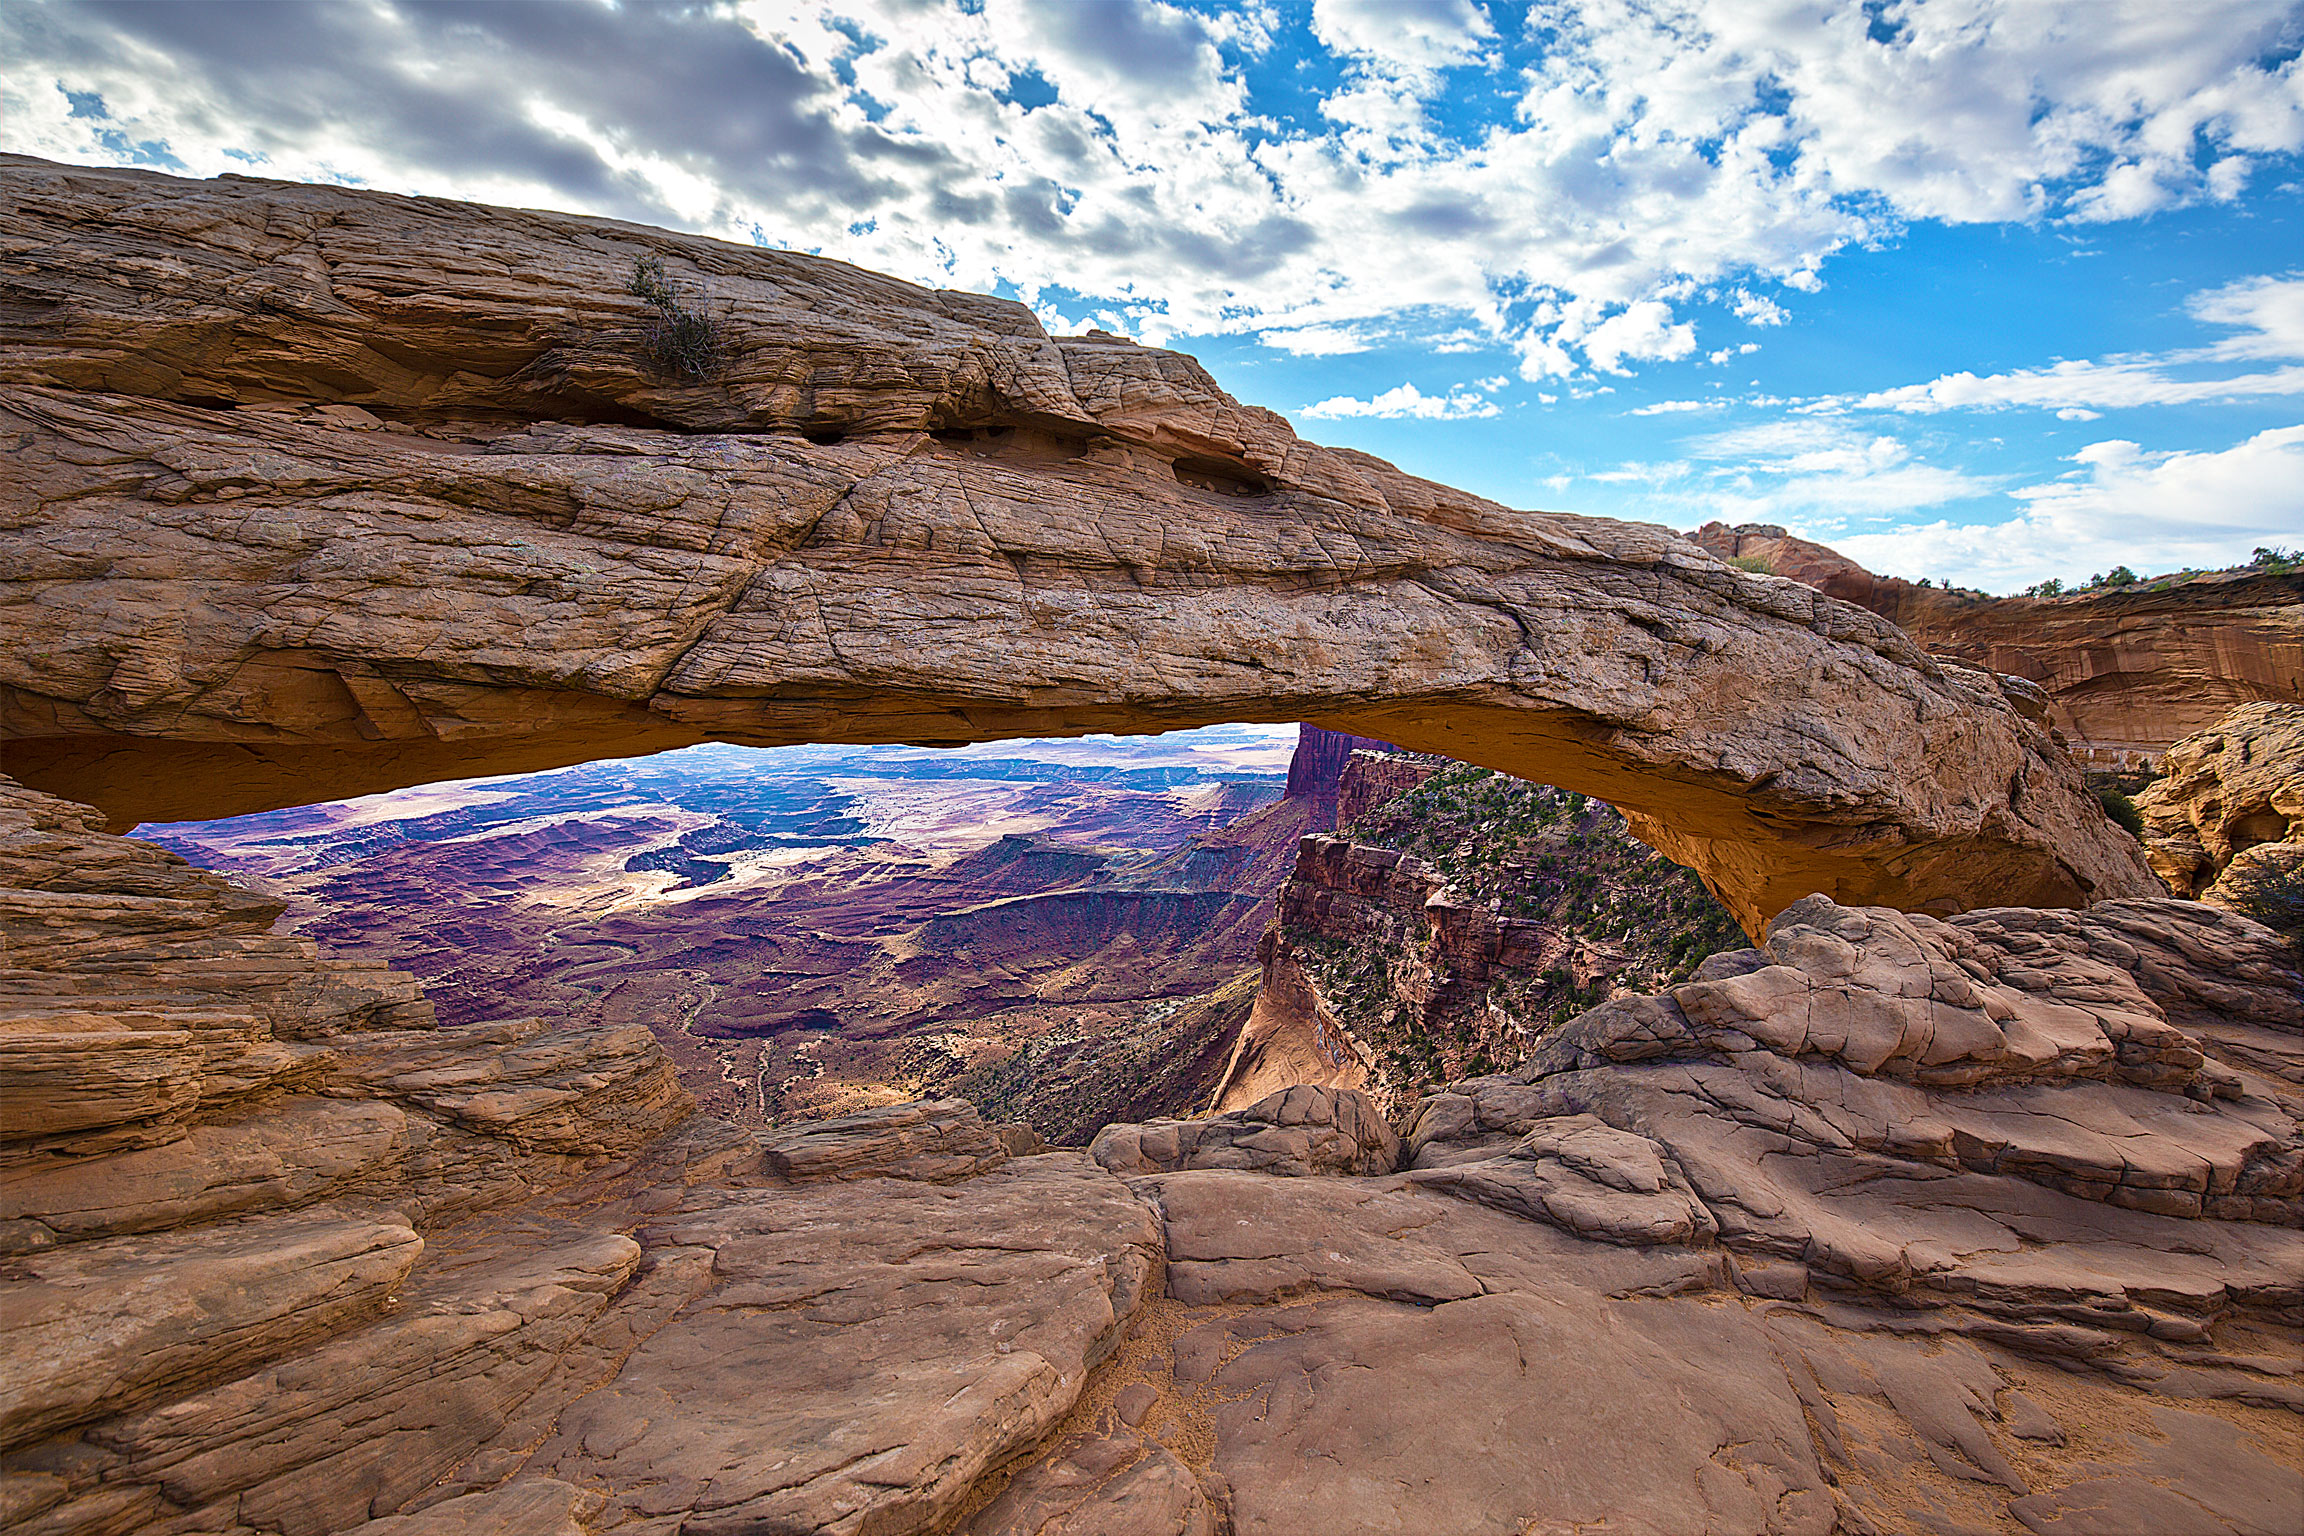 The amazing Mesa Arch